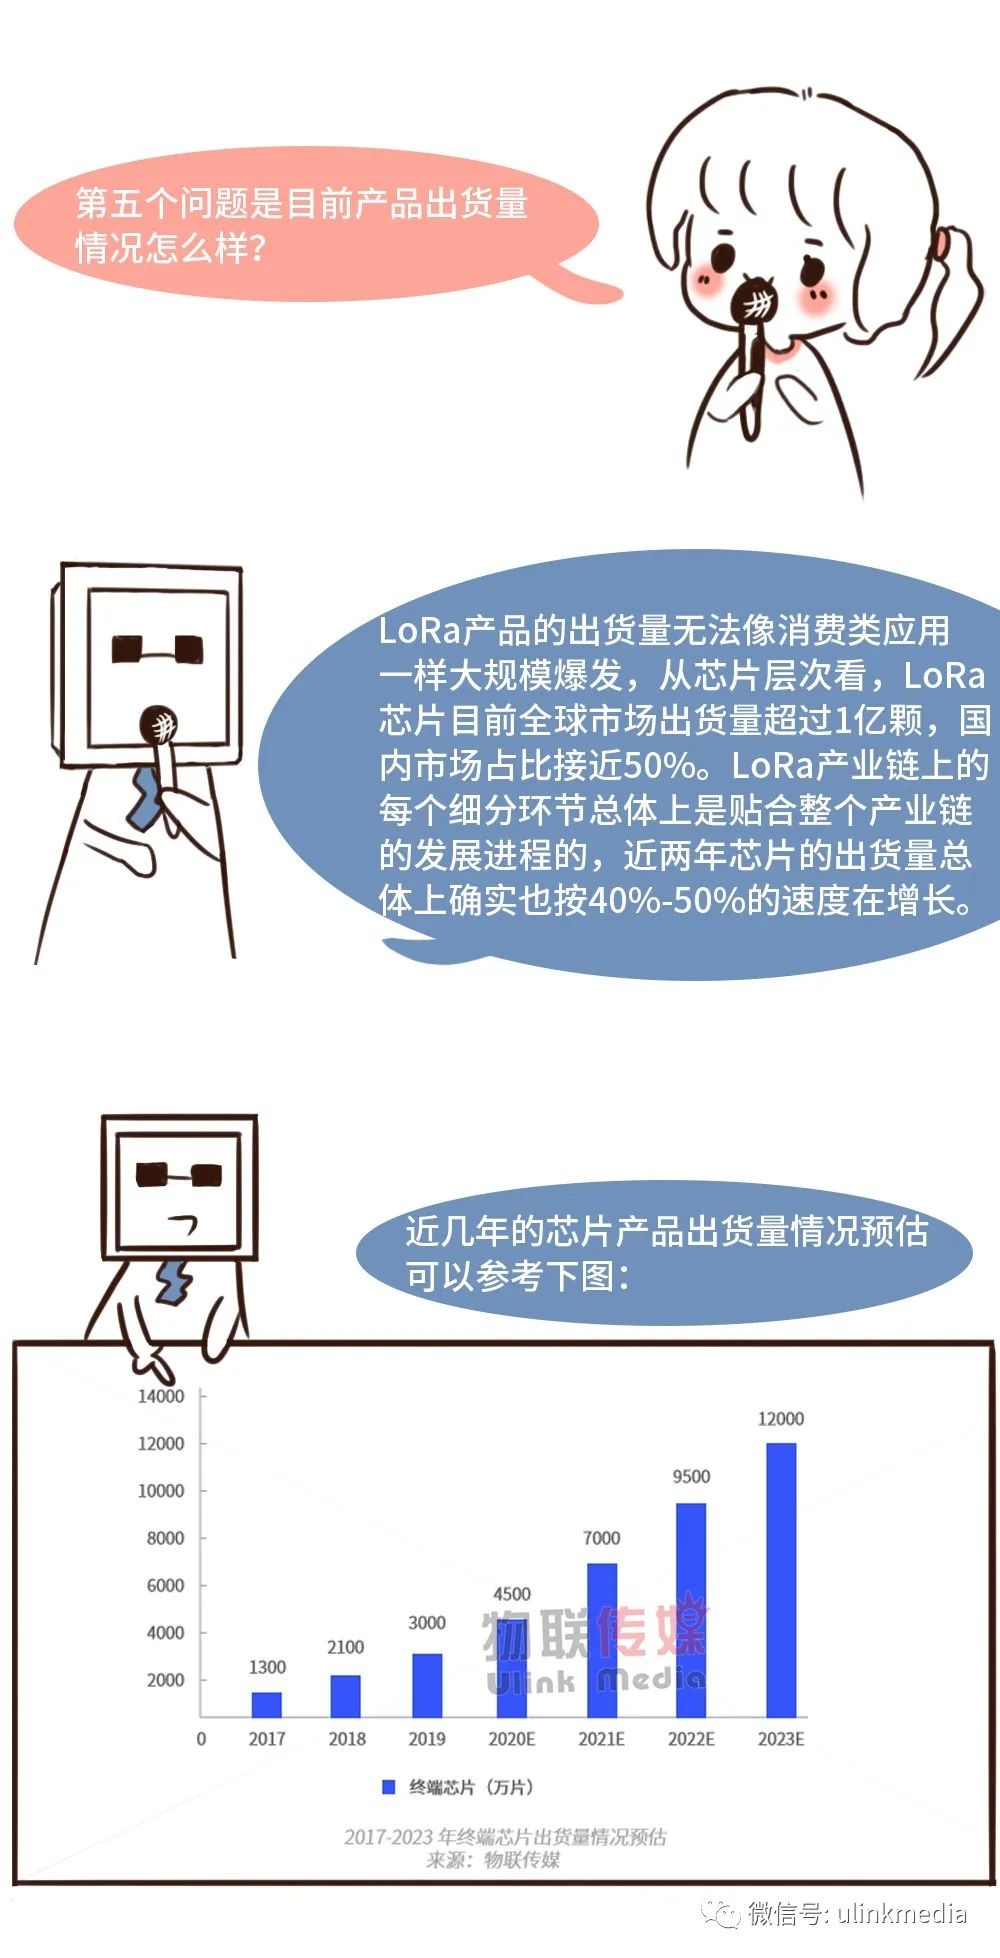 LoRa访谈录：这本“中国LoRa产业市场调研报告20